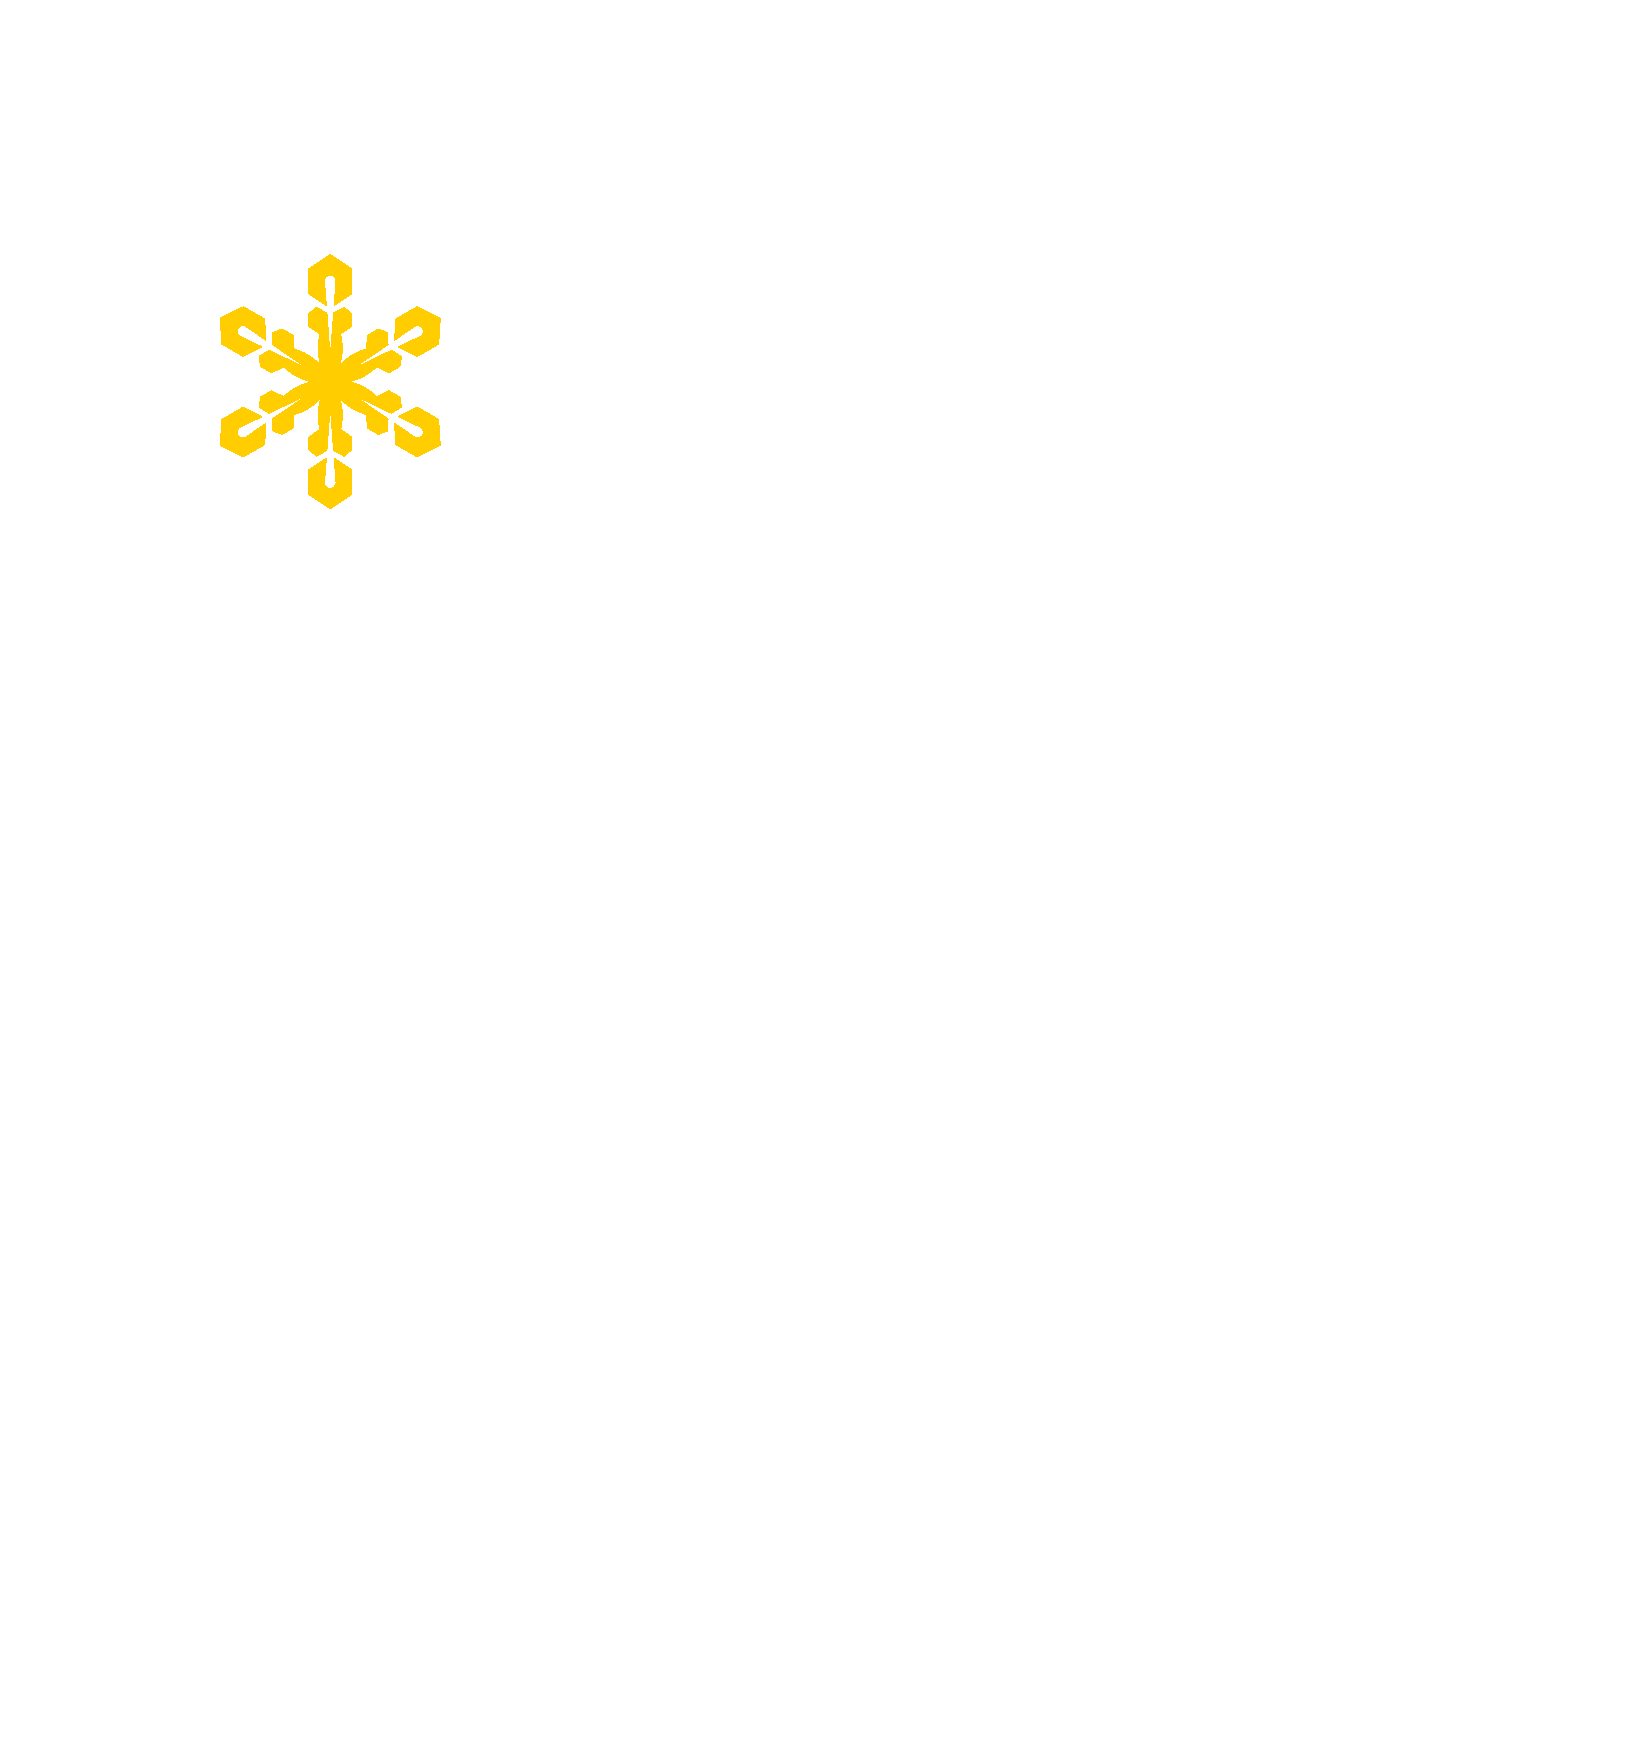 GusTech AS - ice bedrift